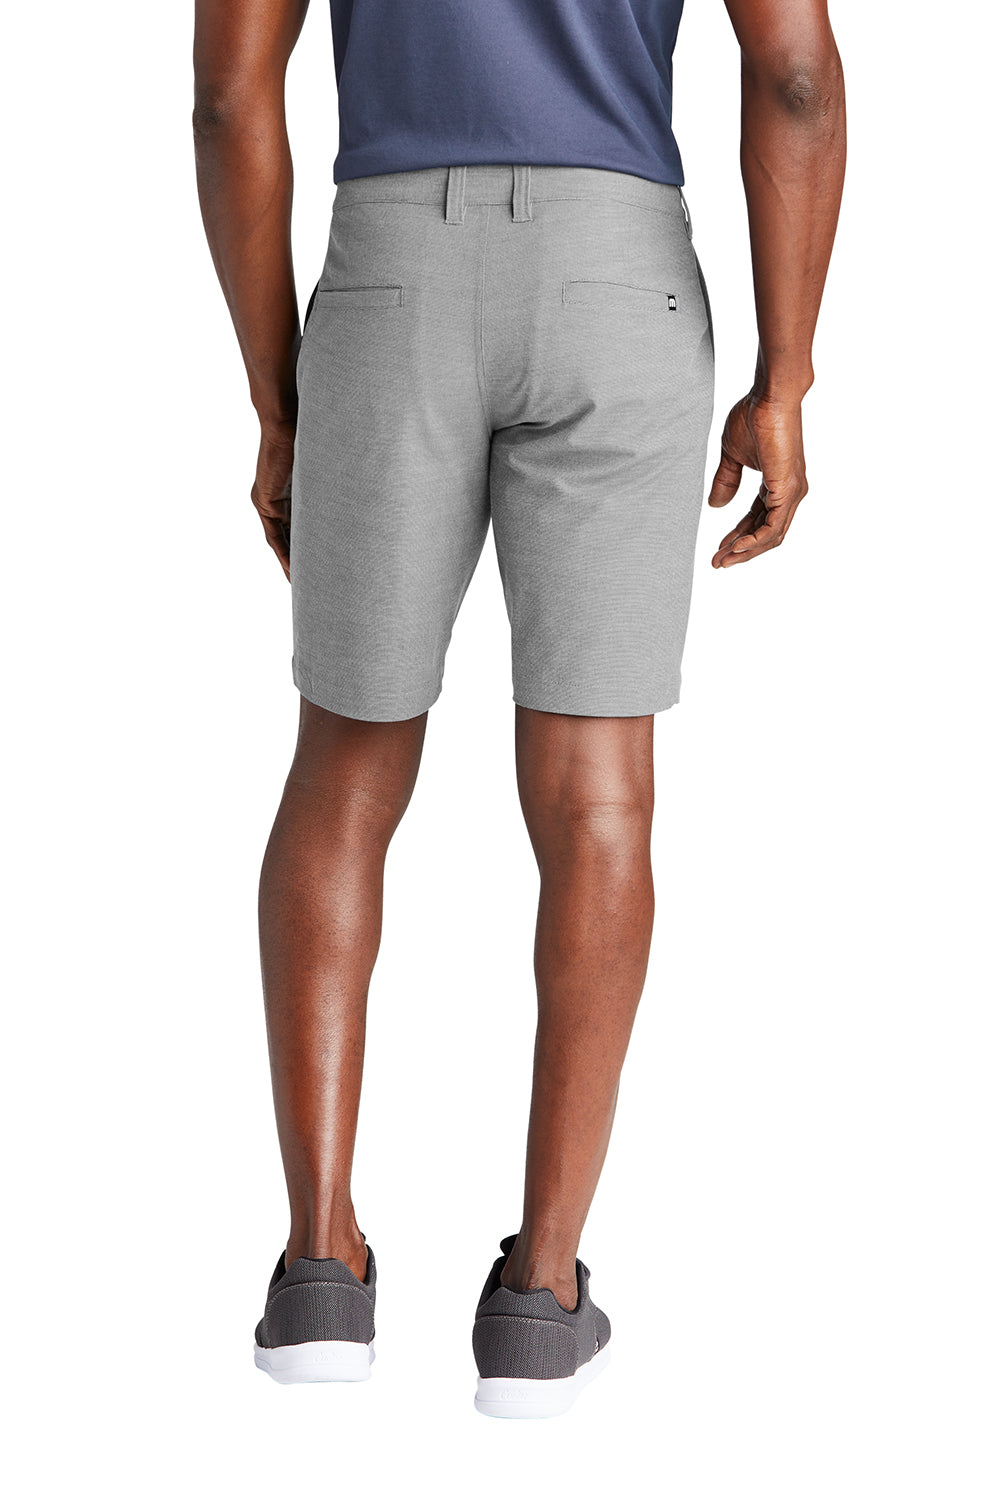 TravisMathew TM1MW454 Mens El Dorado Wrinkle Resistant Shorts w/ Pockets Light Grey Model Back